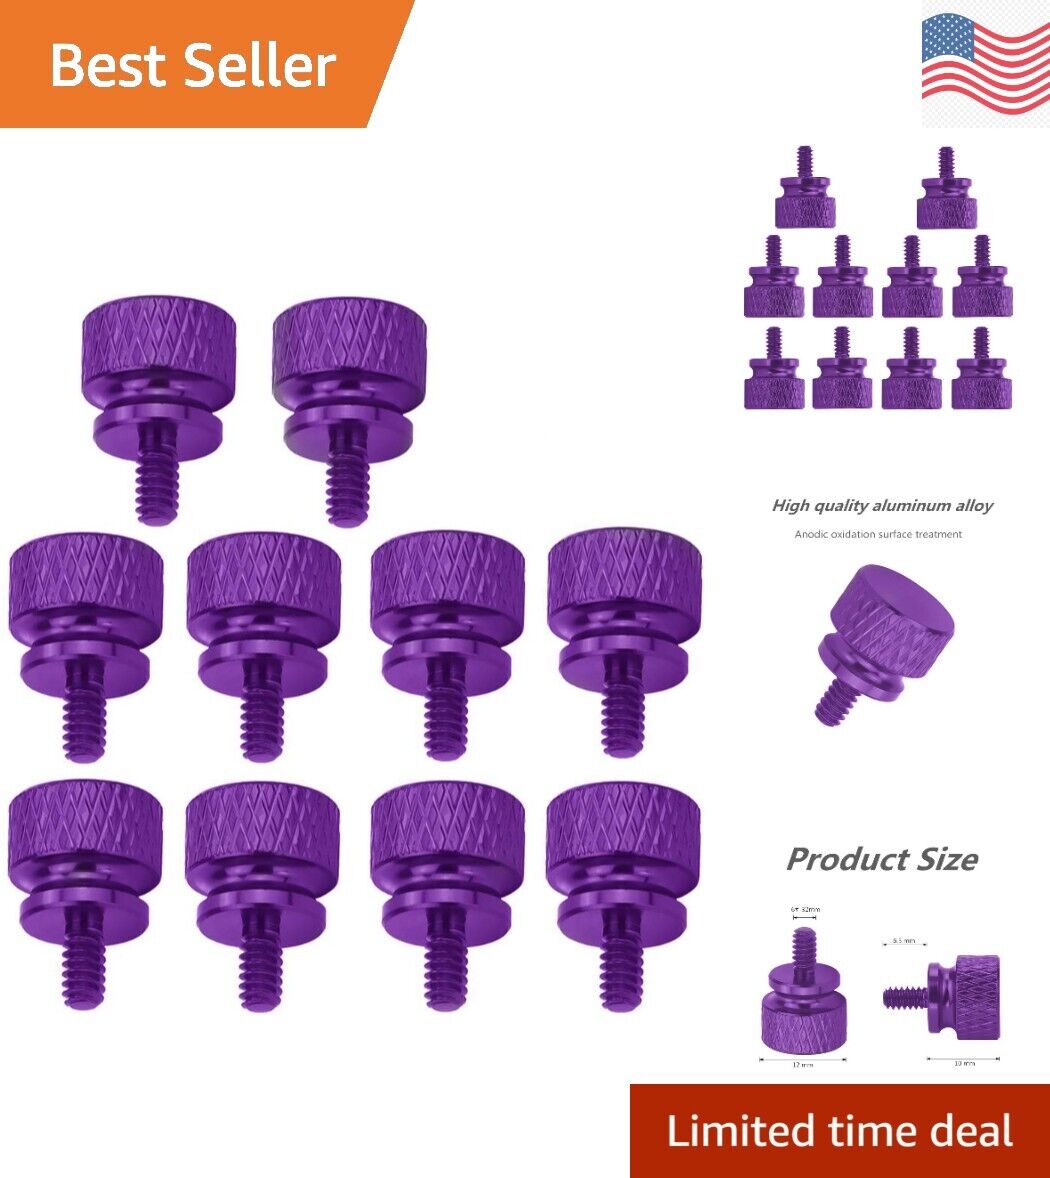 10-pcs Anodized Aluminum Computer Case Thumbscrews - High Quality - Purple